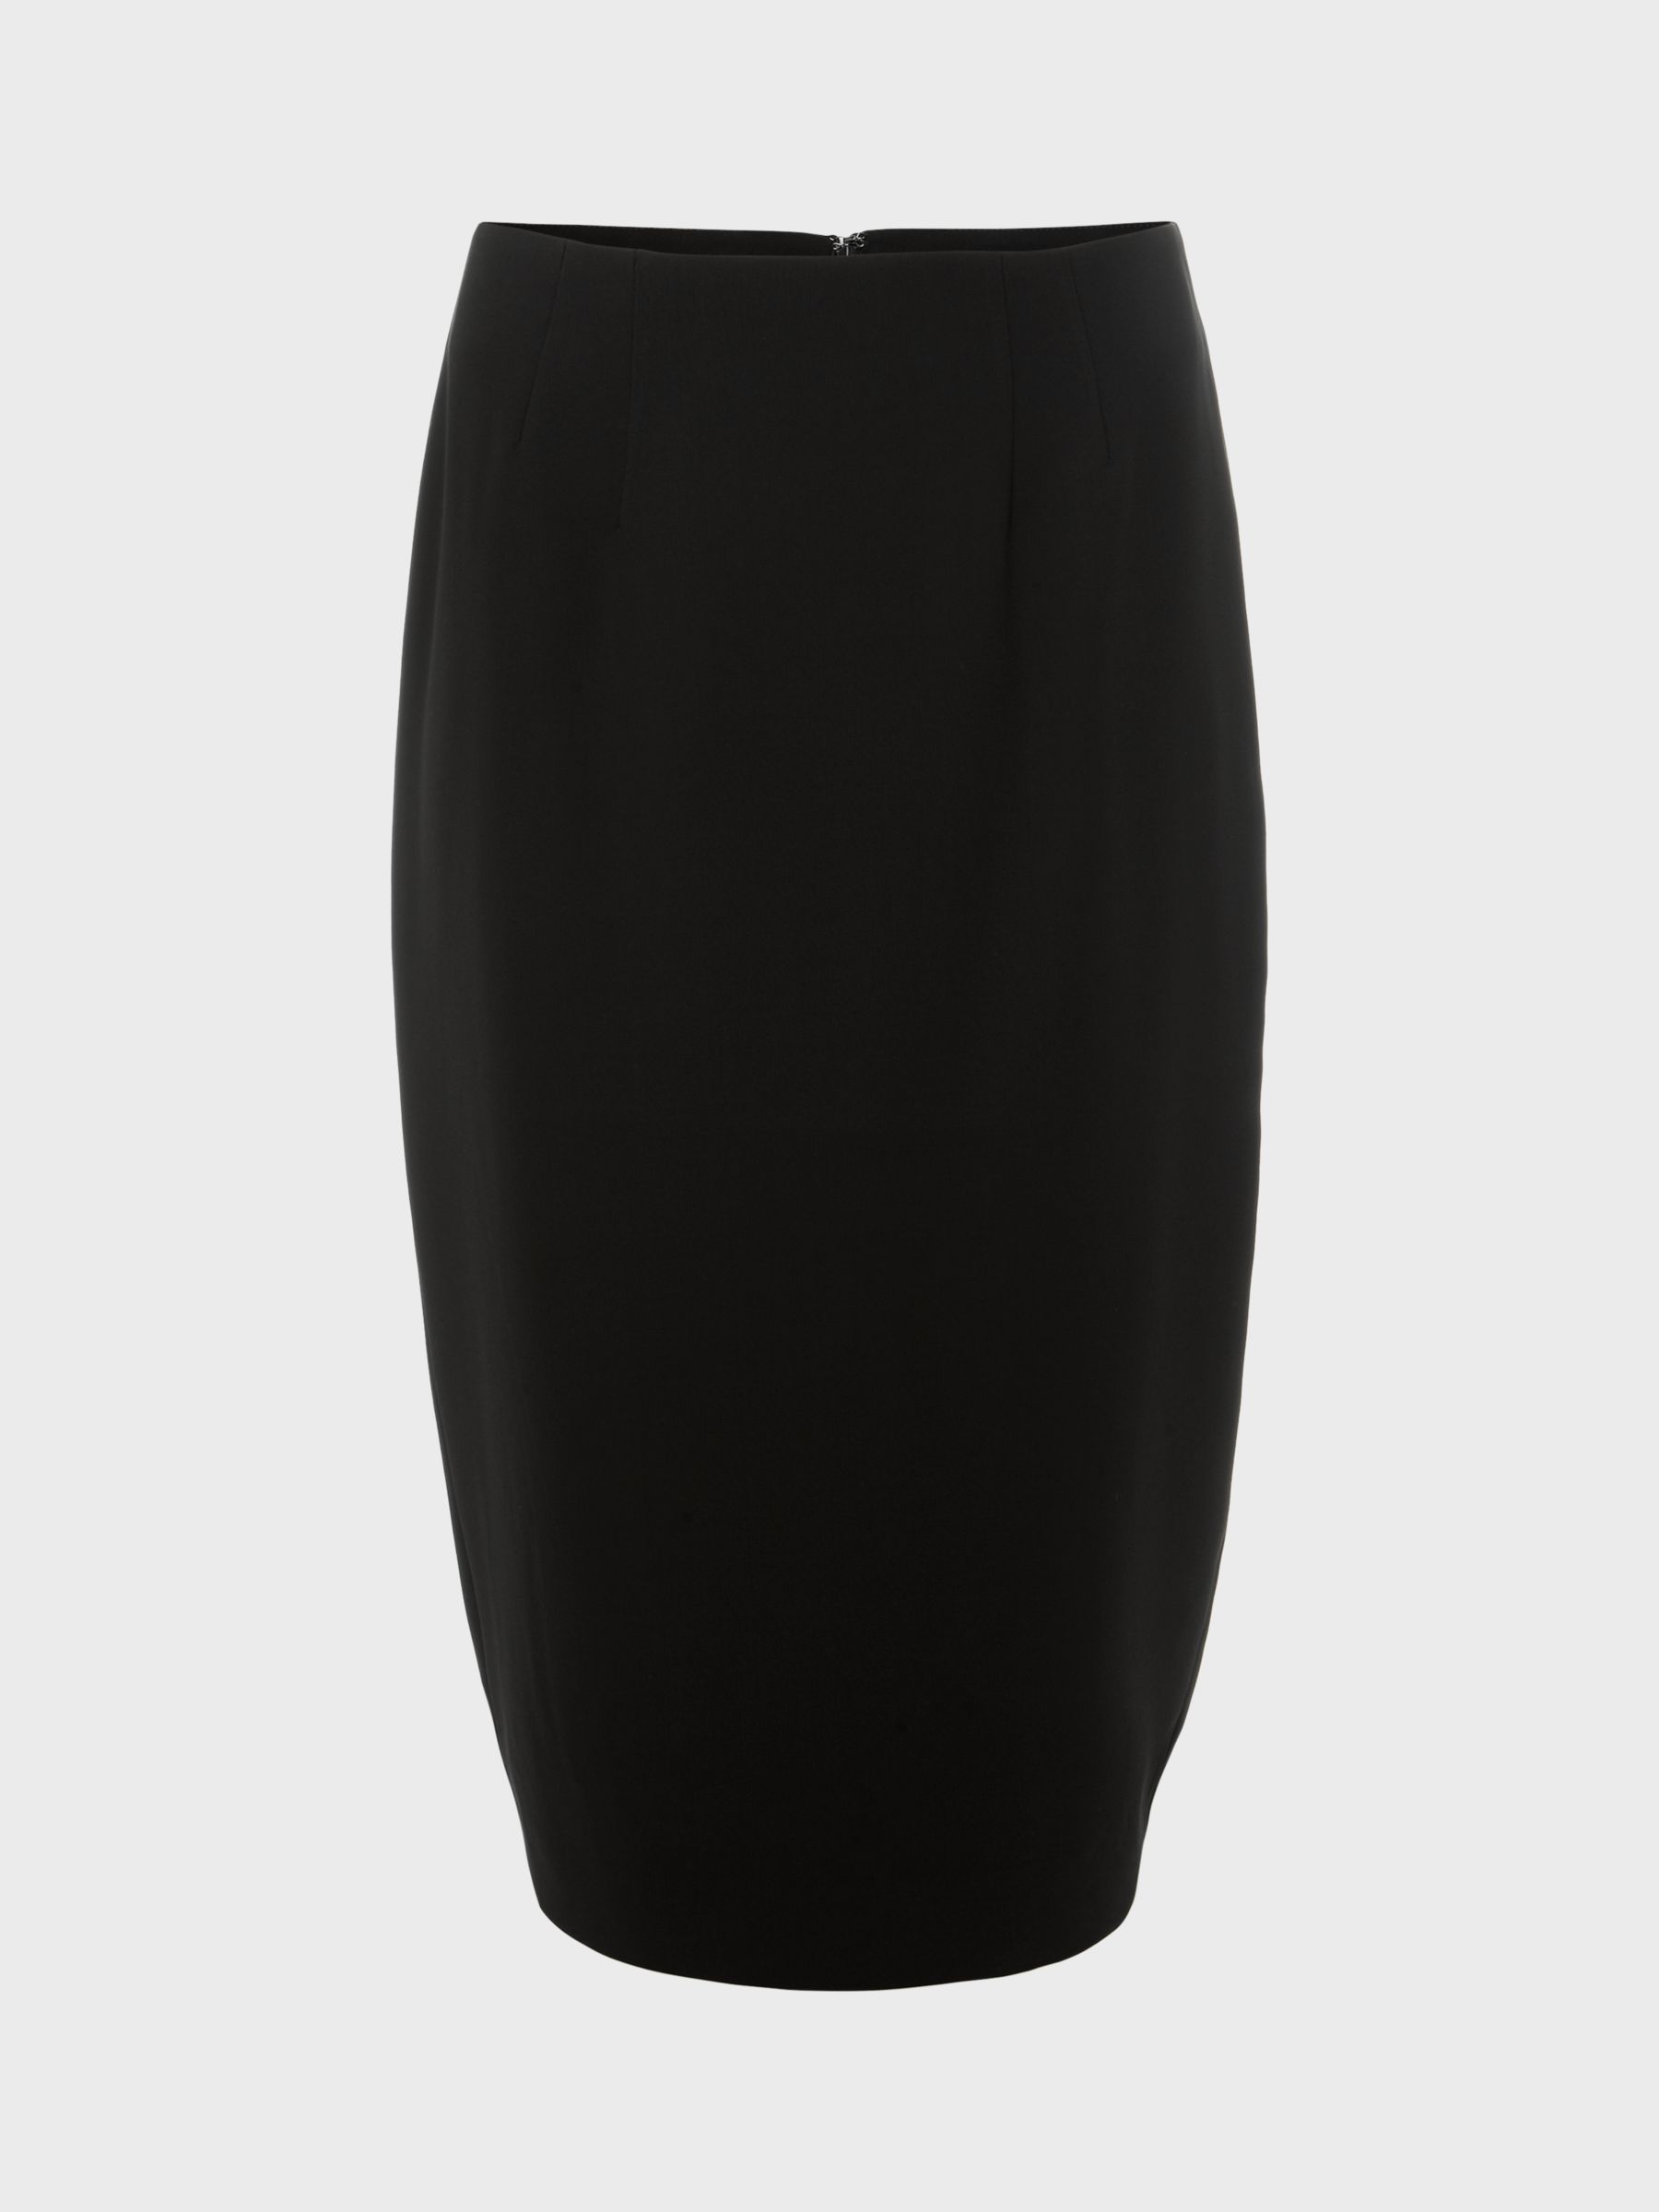 Hobbs Petite Mel Pencil Skirt, Black, 6